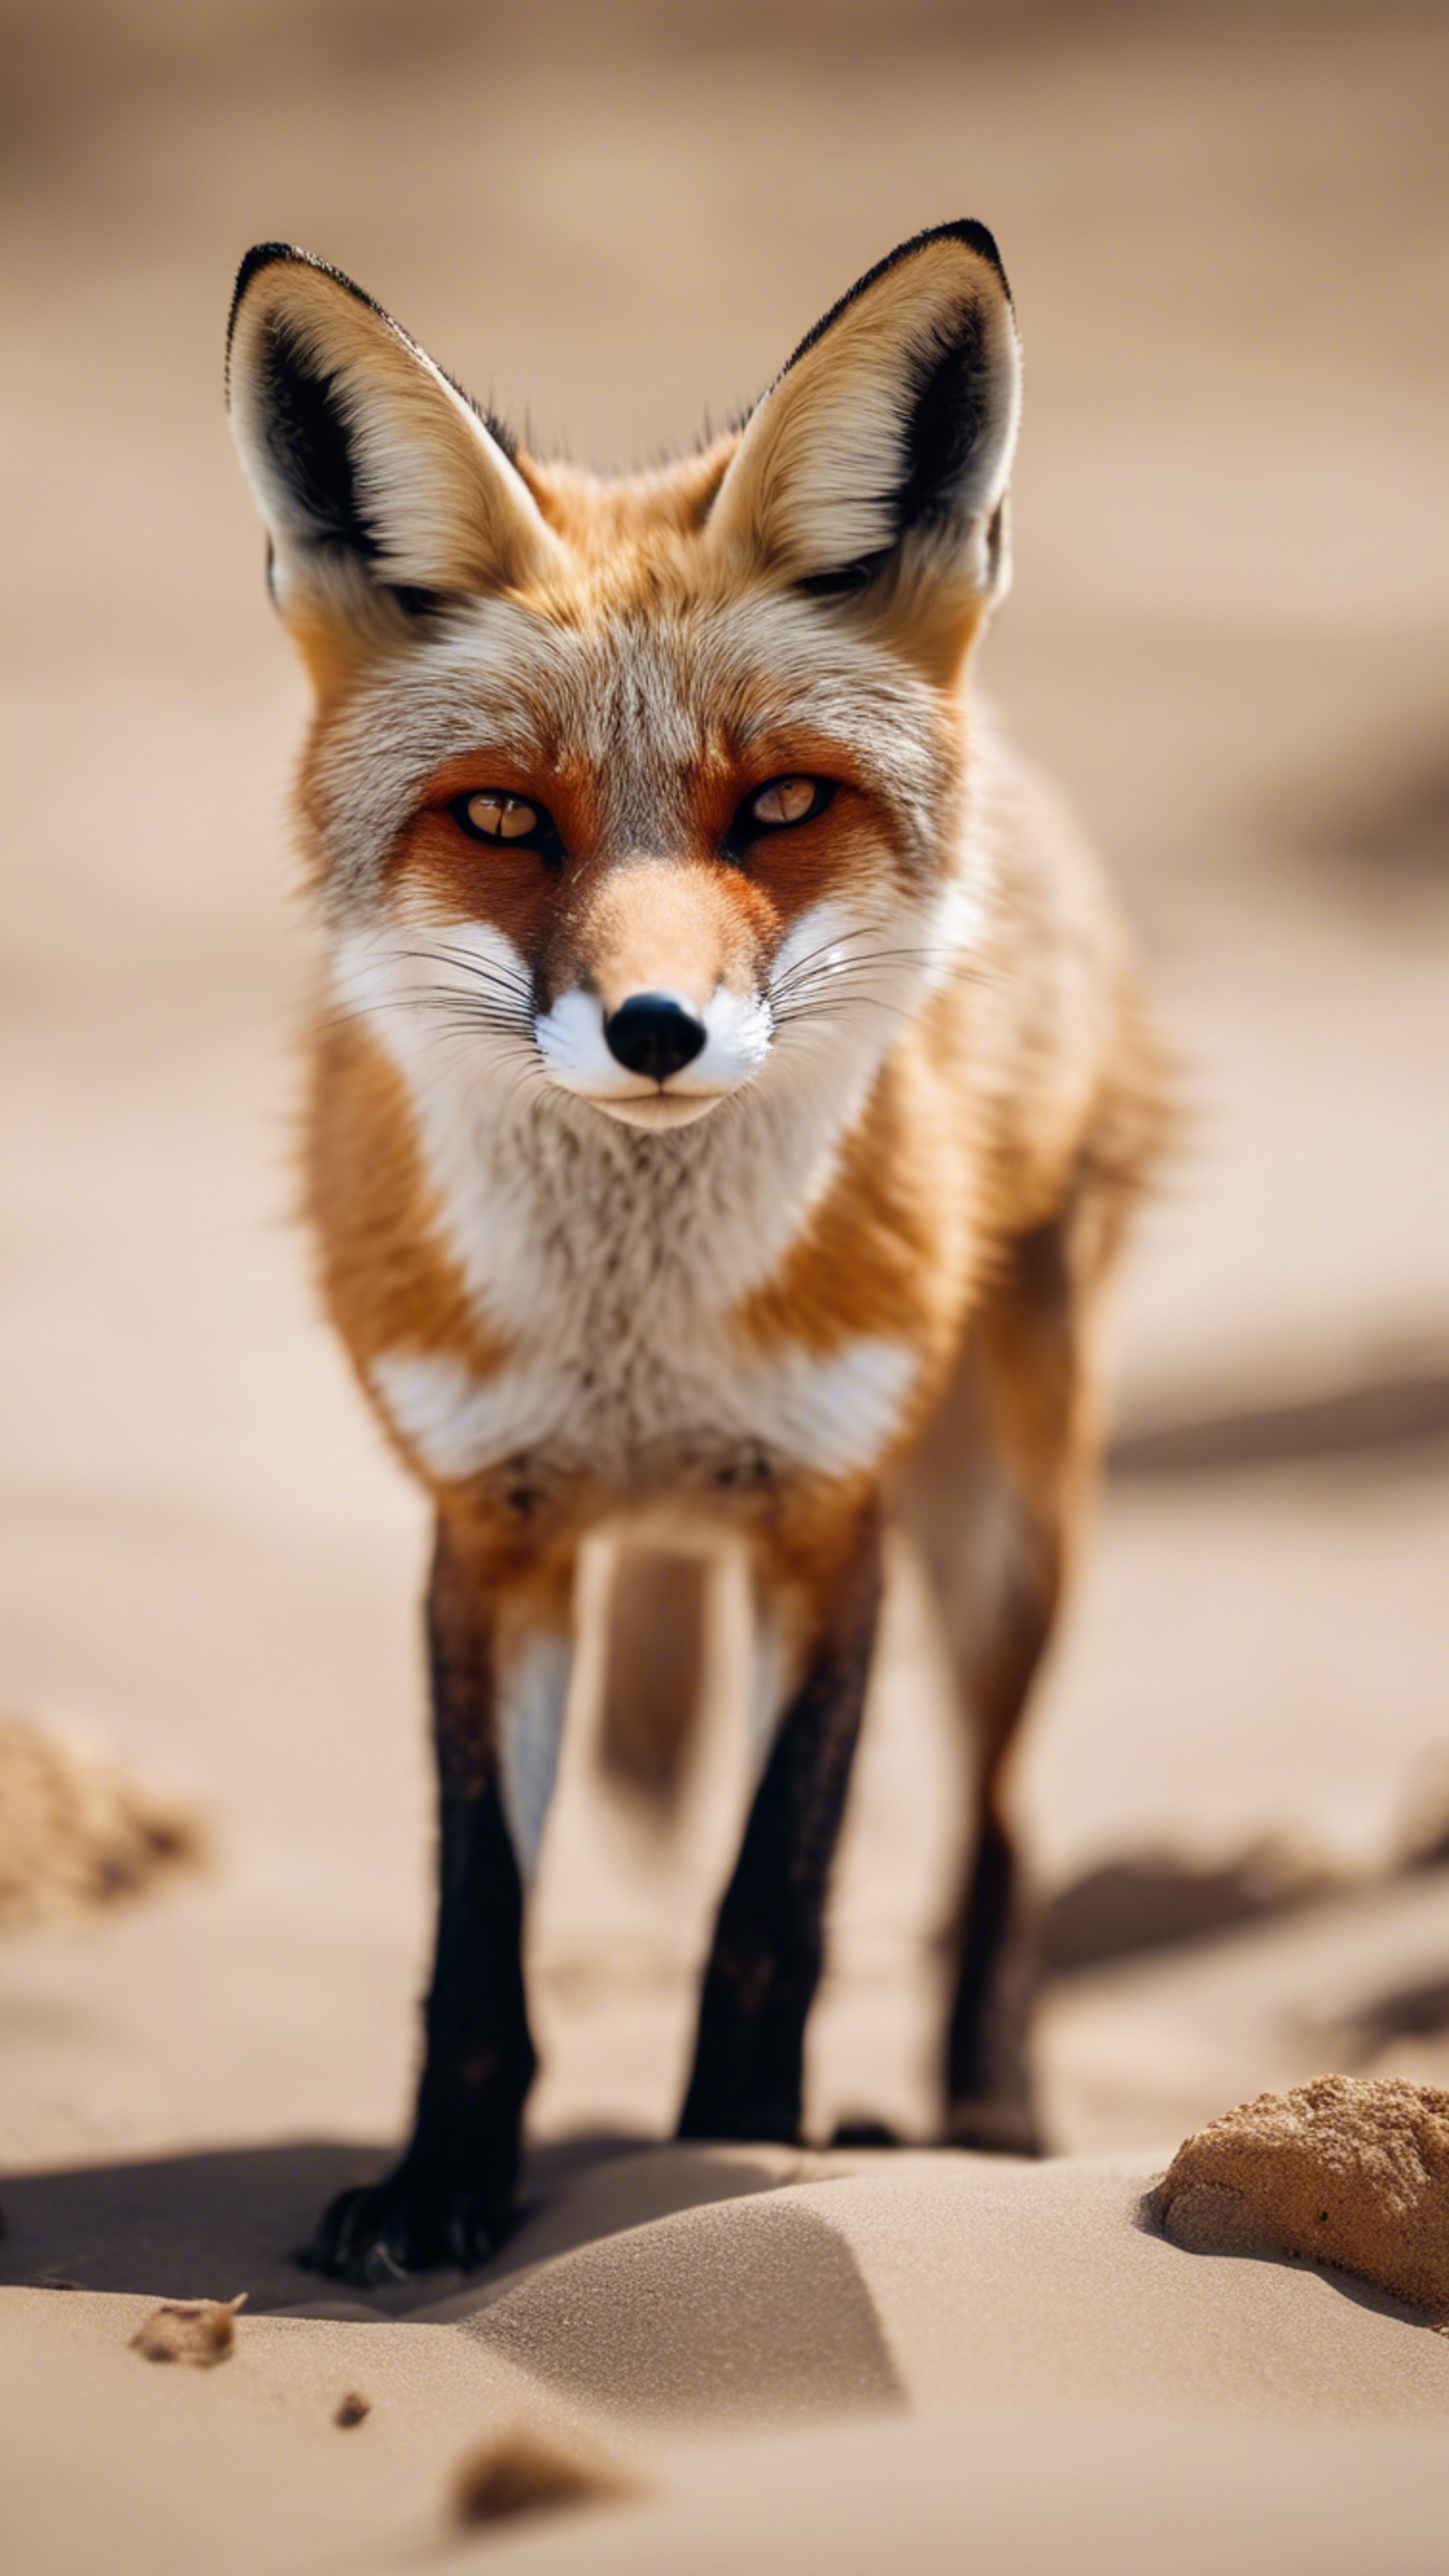 A lone desert fox in its natural habitat, roaming around amid the sand dunes. Hintergrund[17bb71b2b2bc40f18dca]